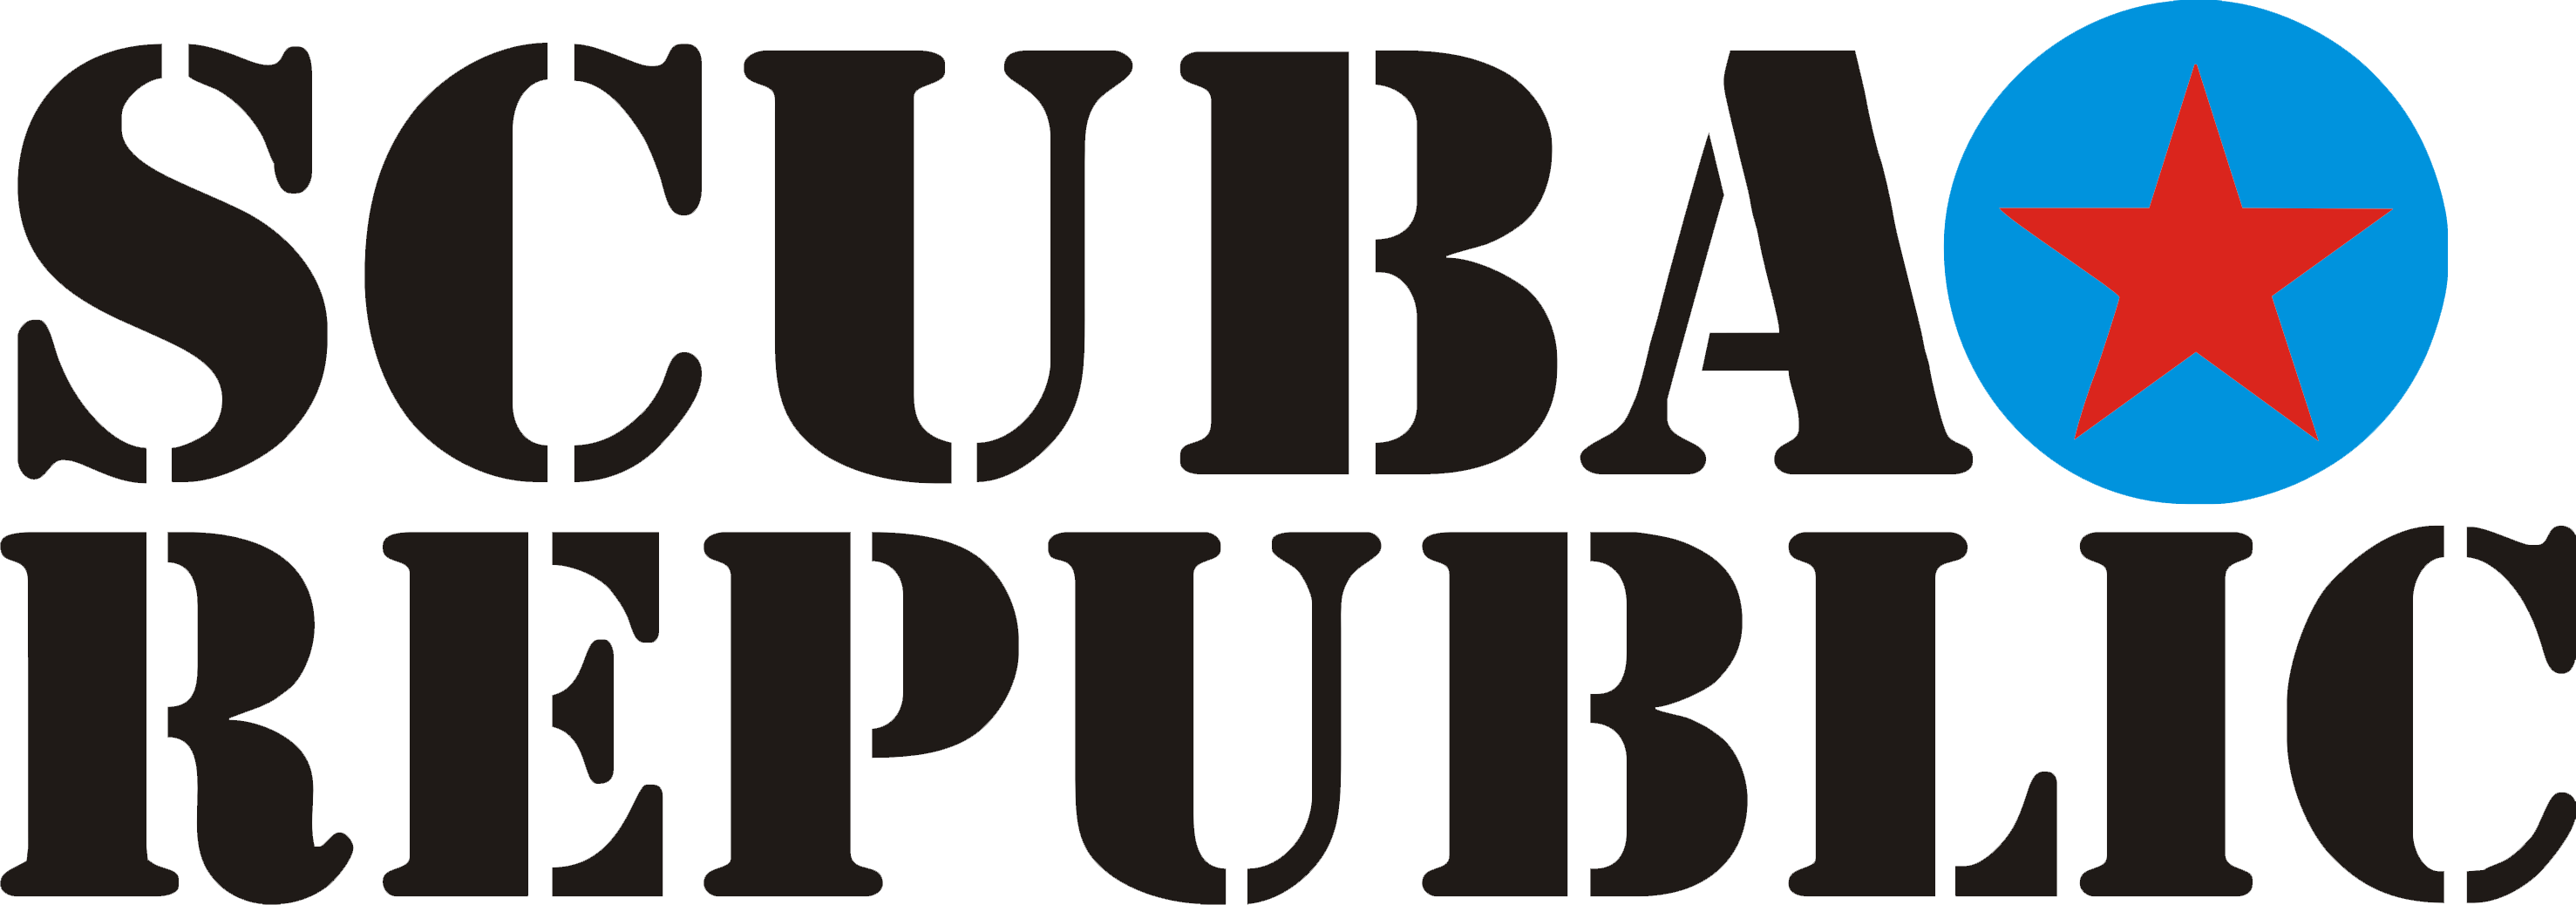 Scuba Republic logo